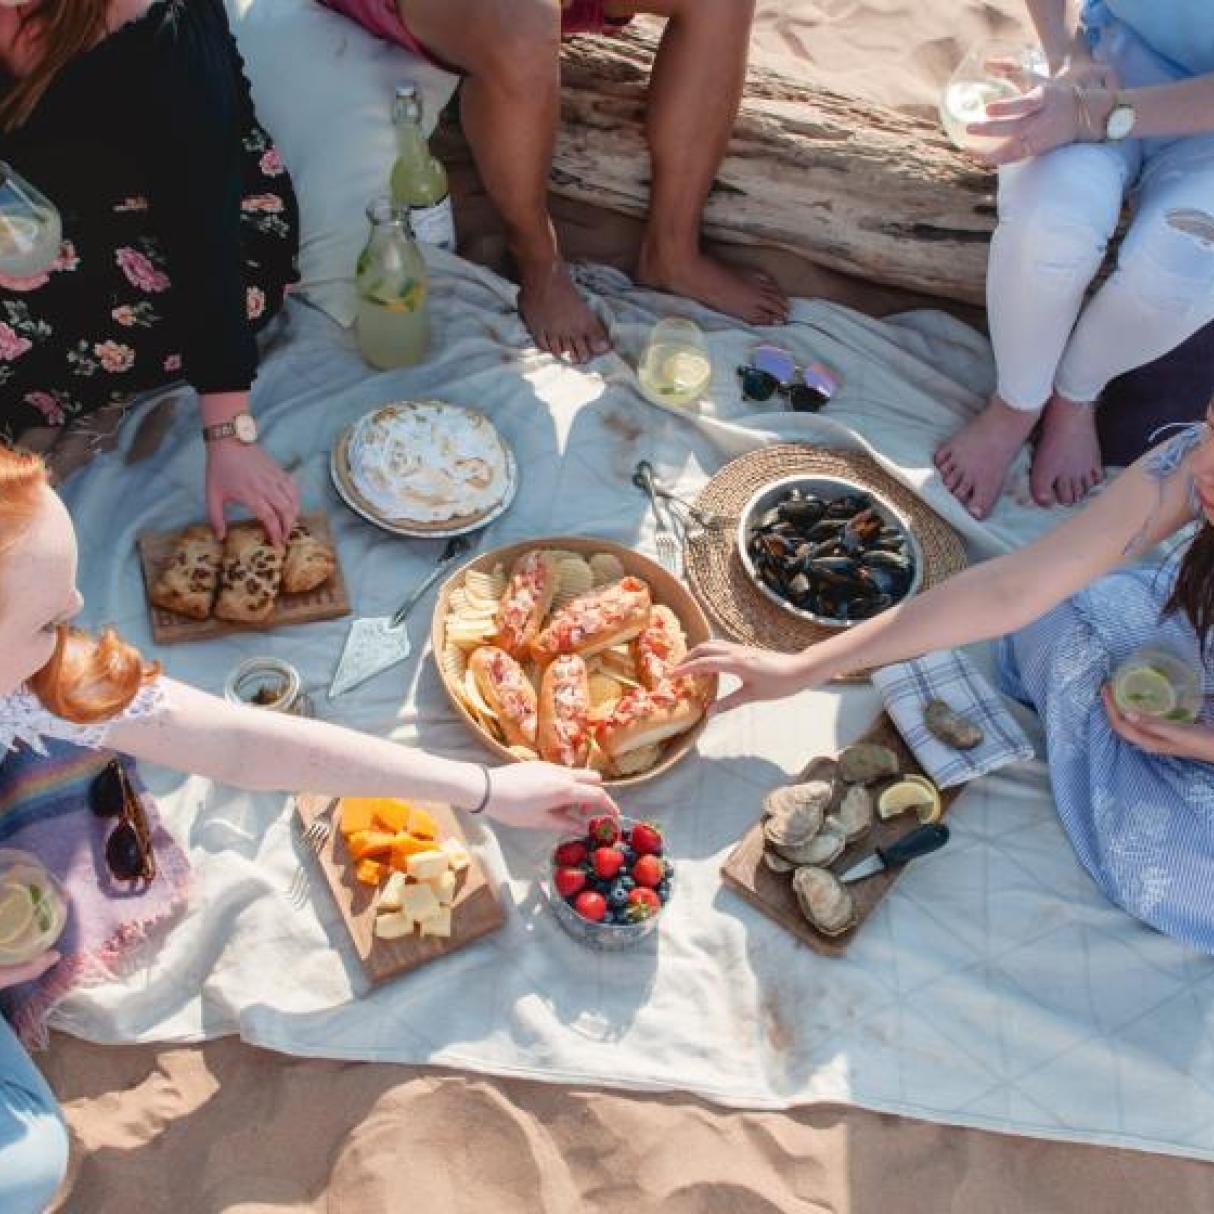 A group enjoying a picnic on the beach